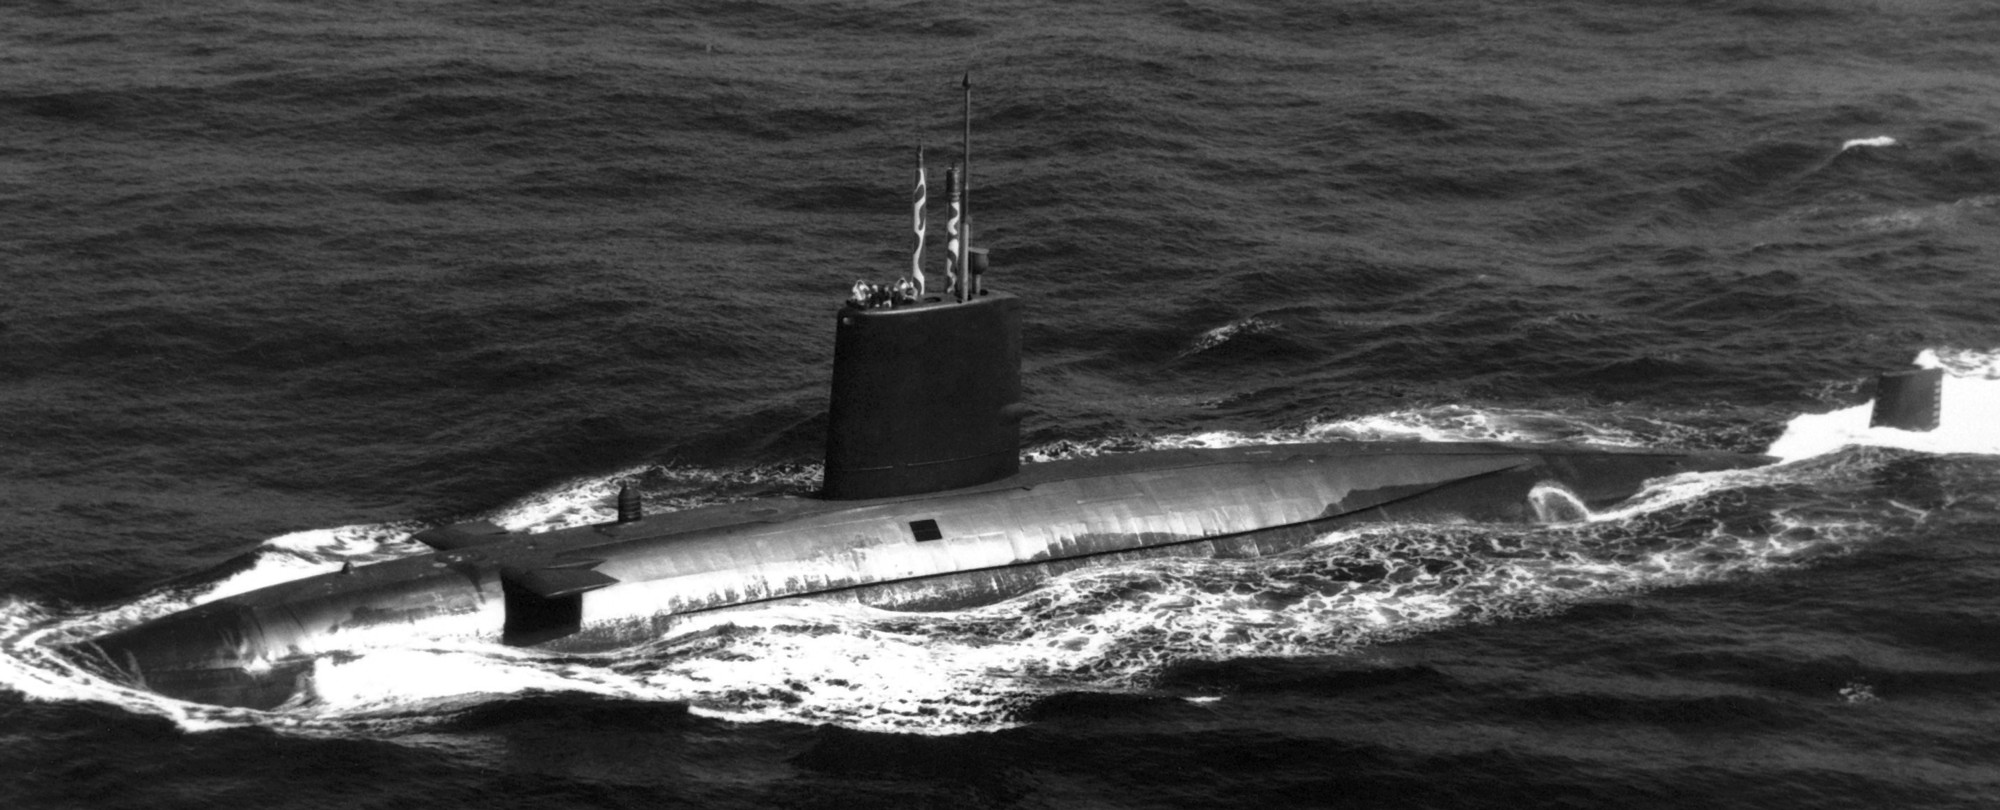 valiant class attack submarine royal navy nuclear powered hms warspite